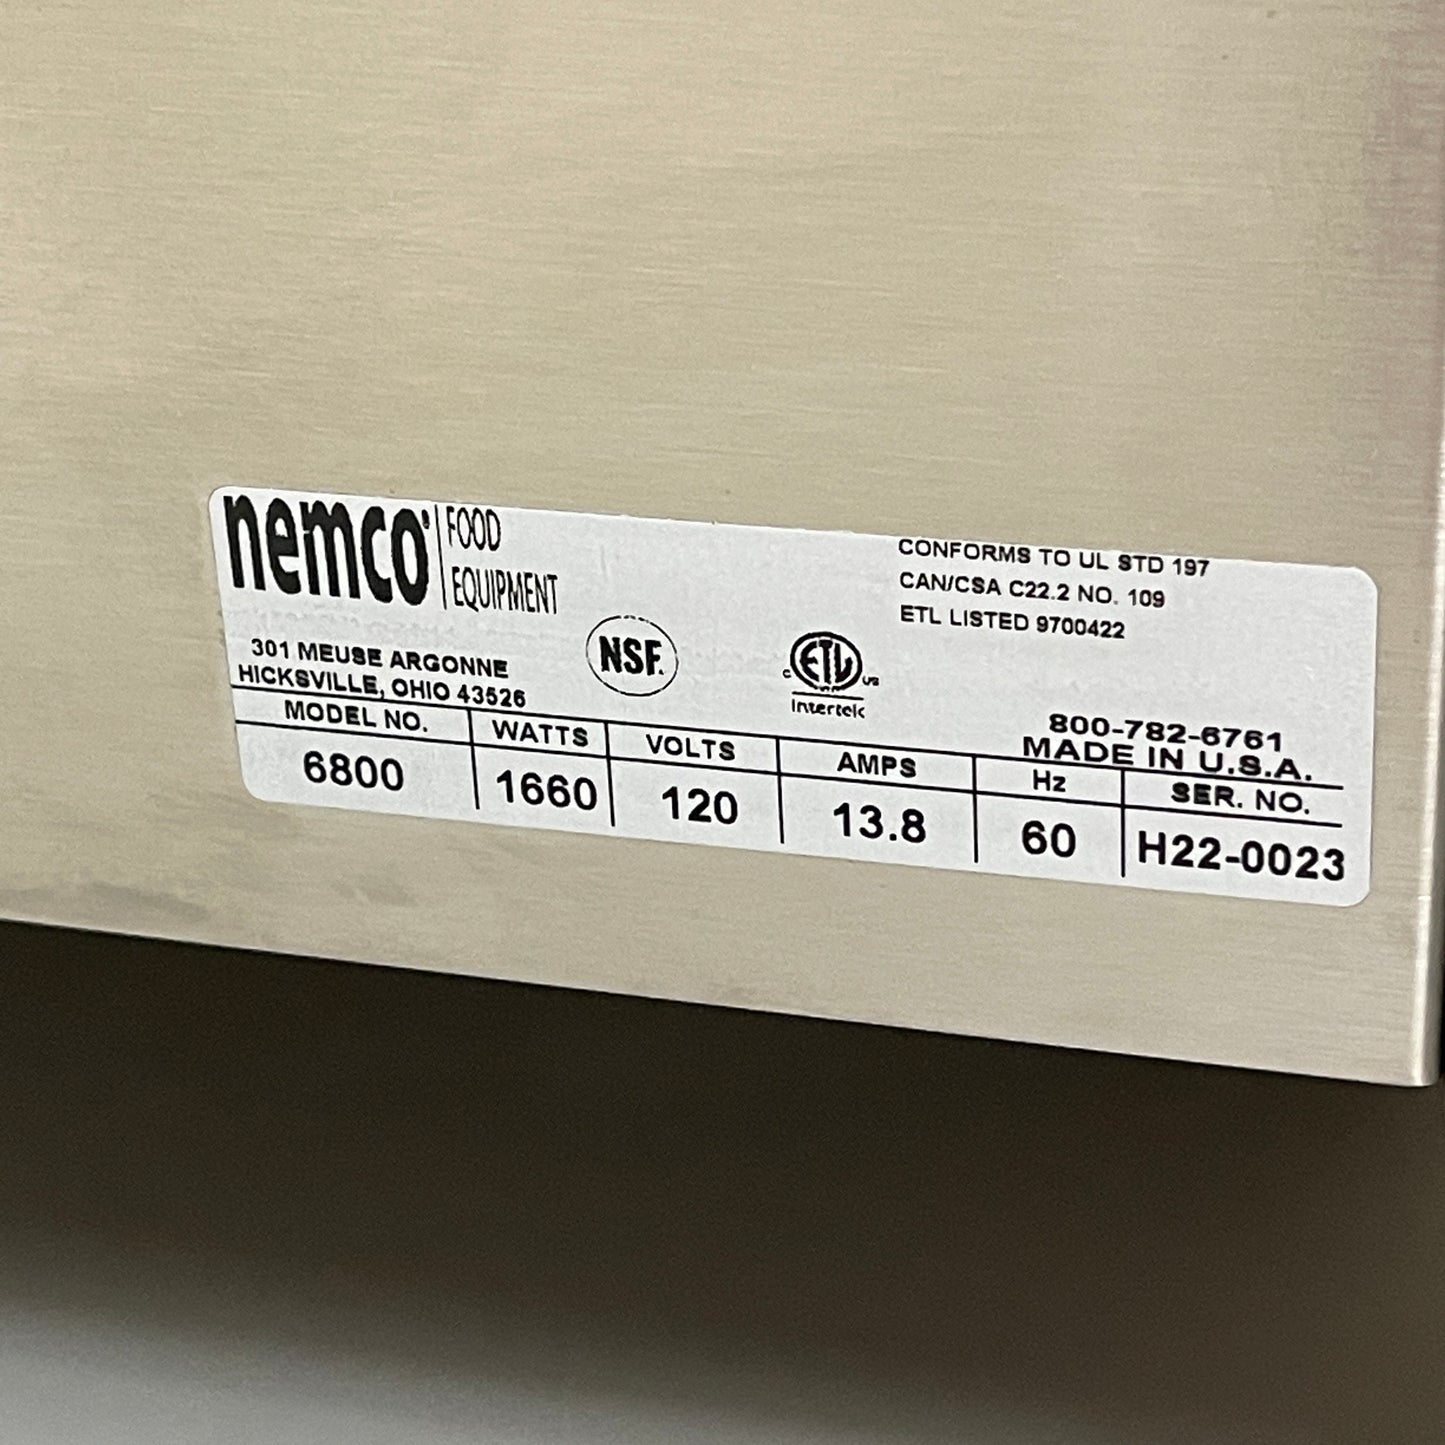 NEMCO 6800 Conveyor Toaster 300 Slices/hr 120v Stainless Steel (New w/ Damage)